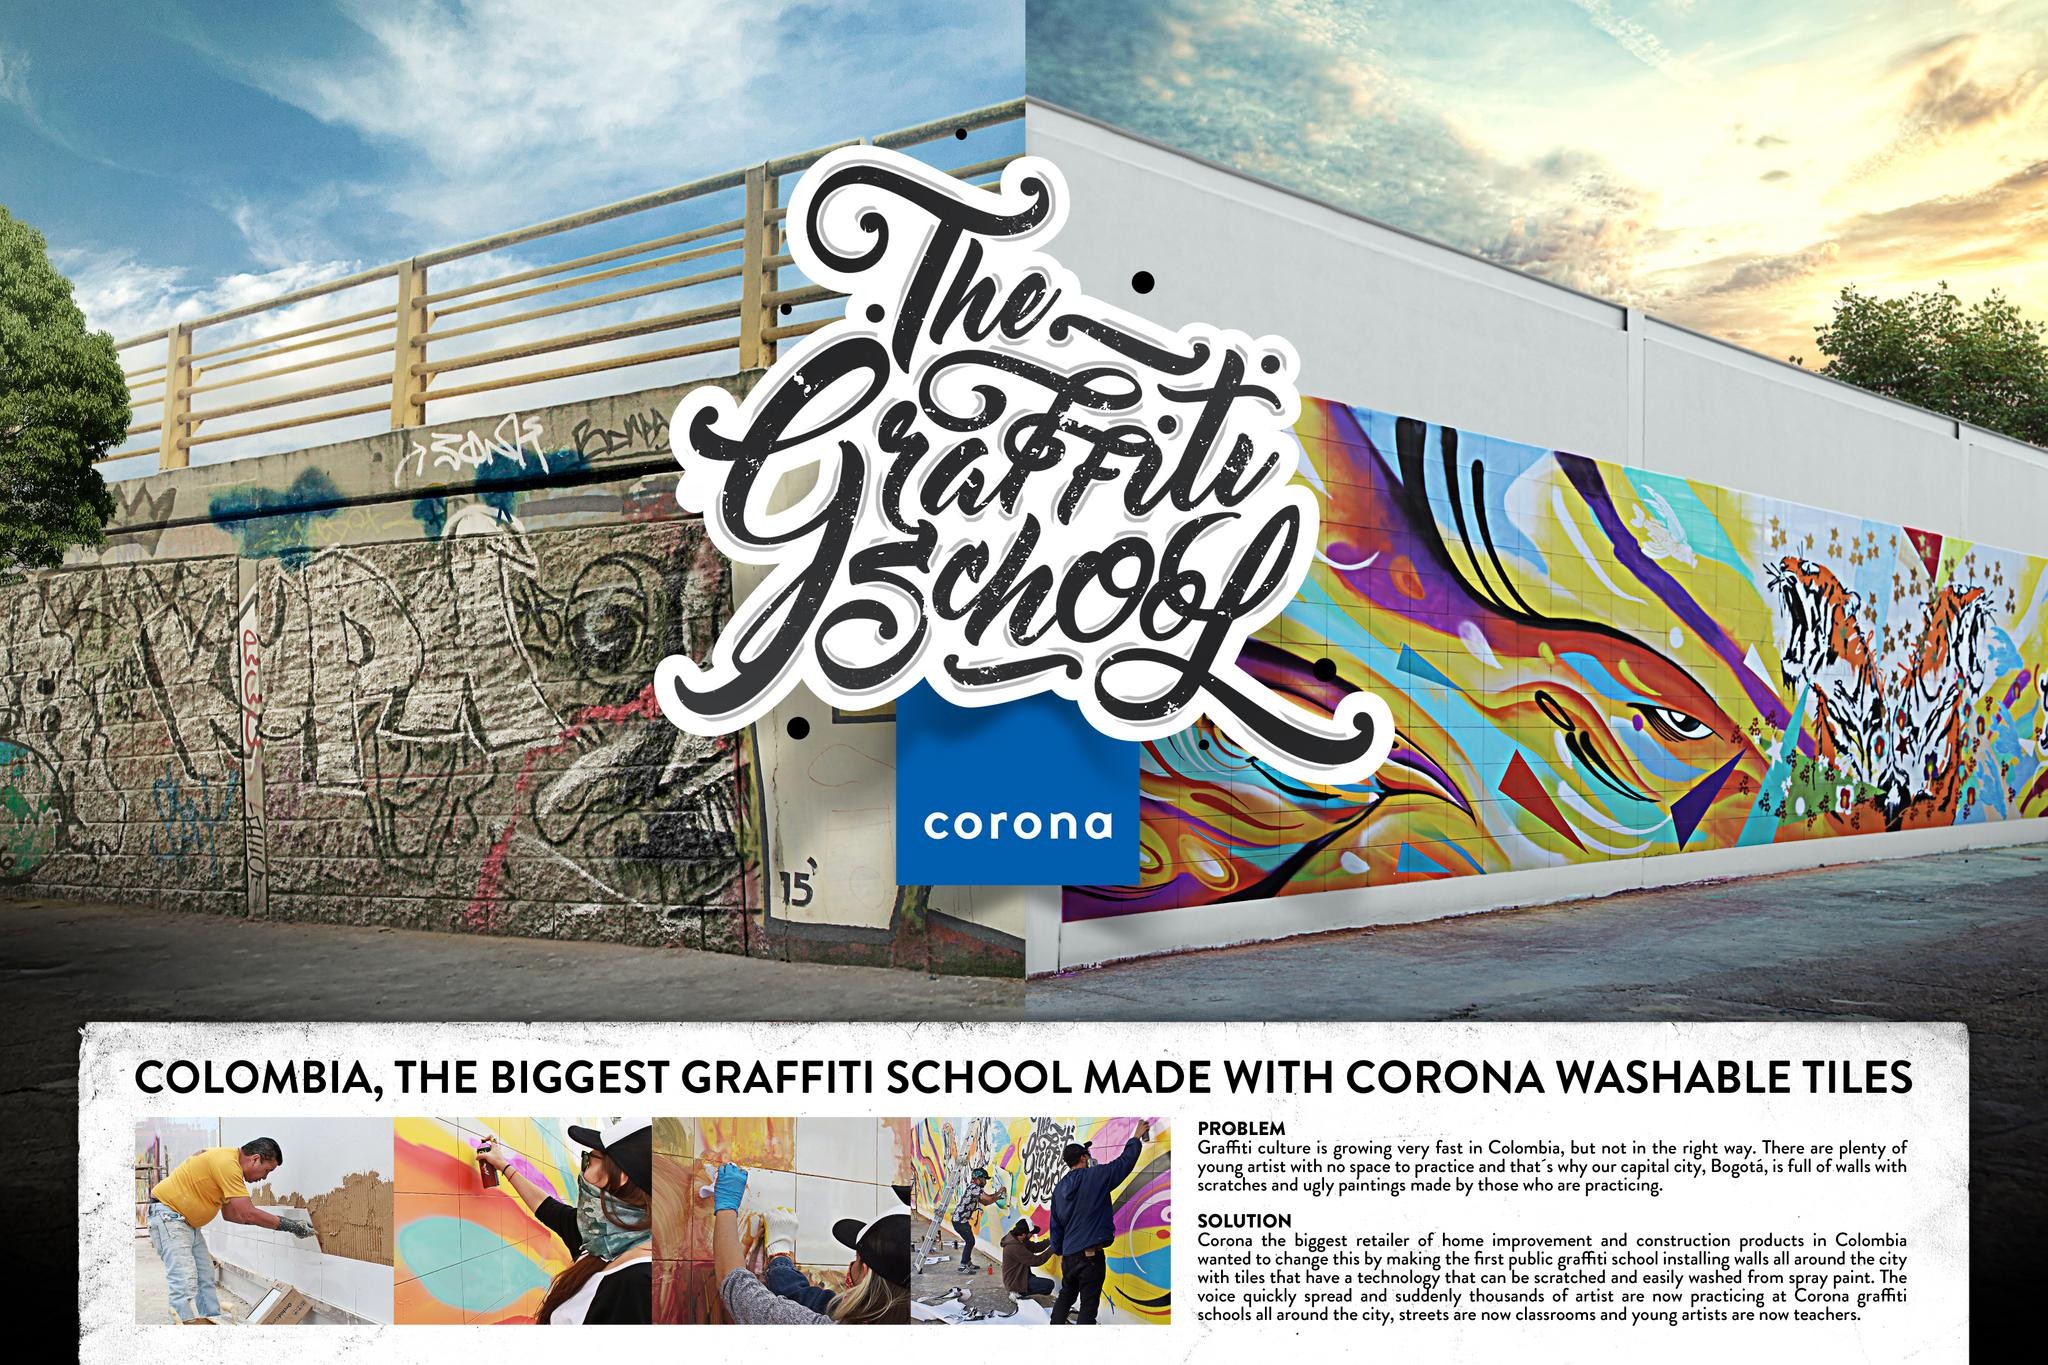 The Graffiti School